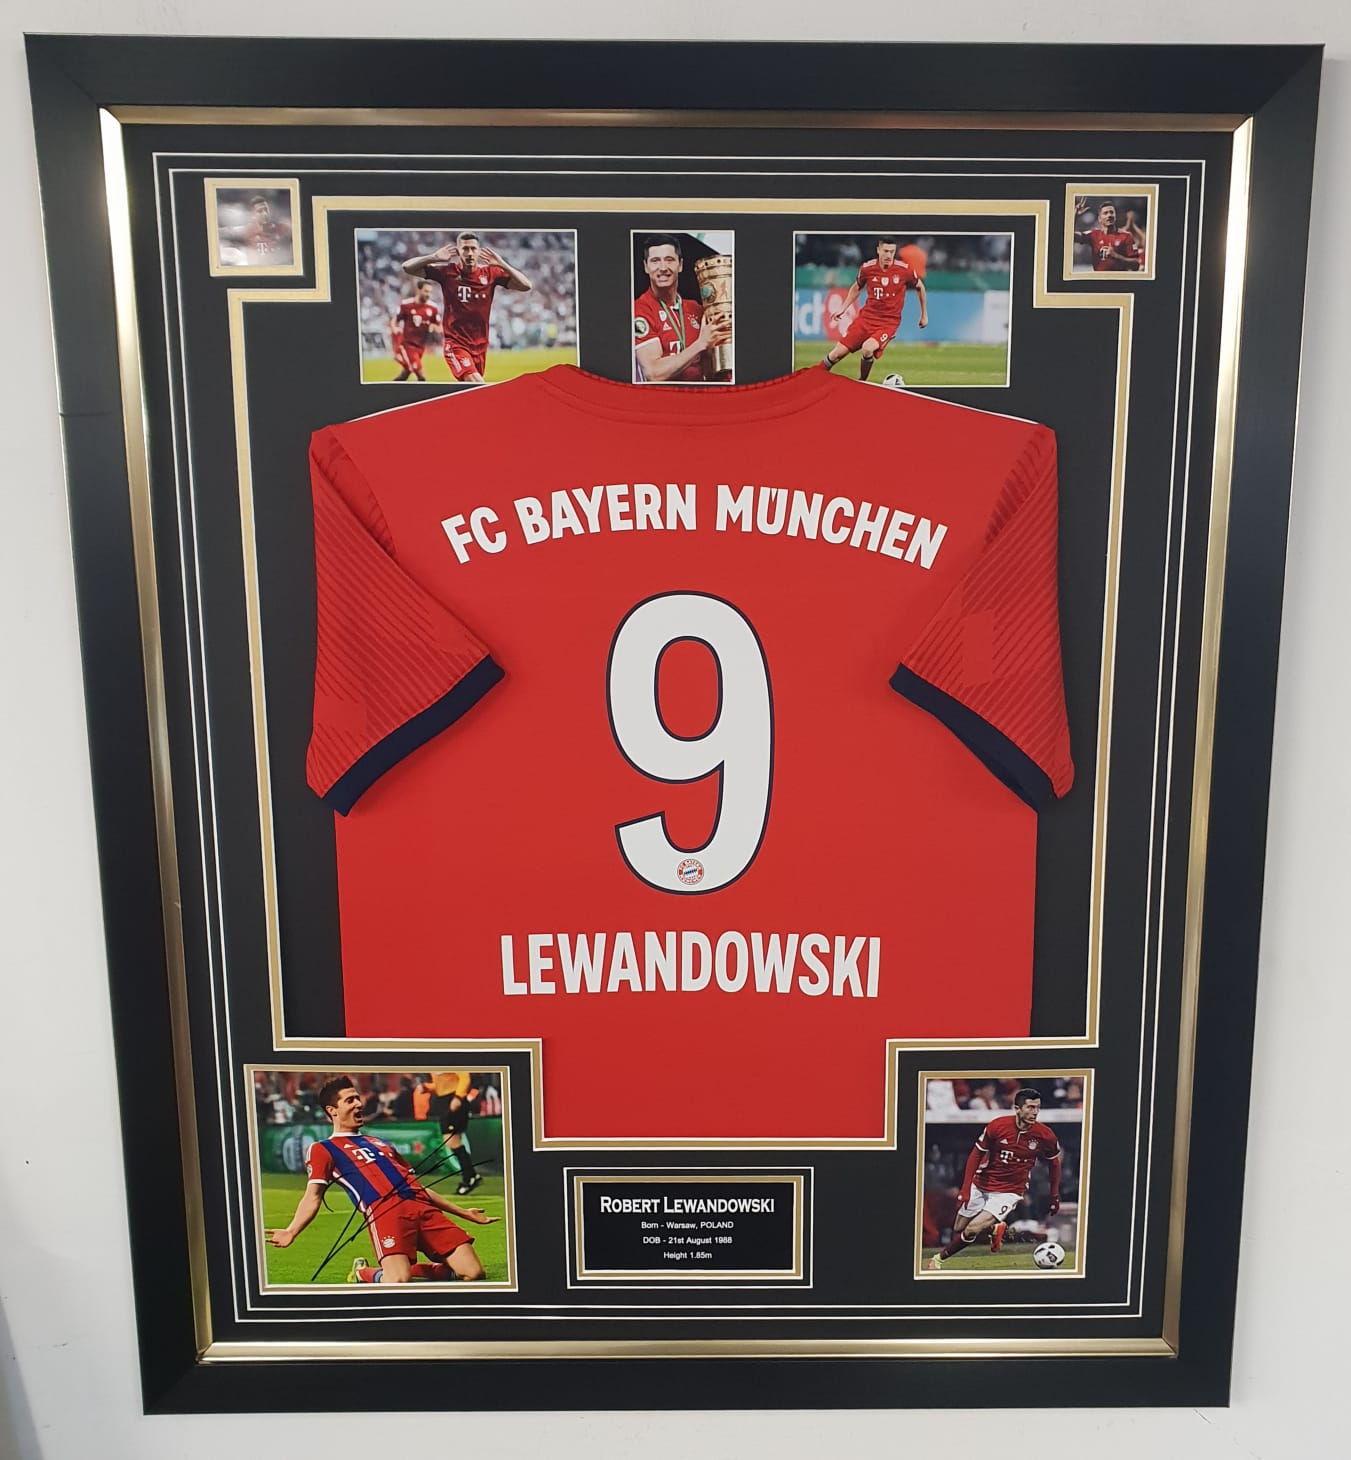 lewandowski signed jersey